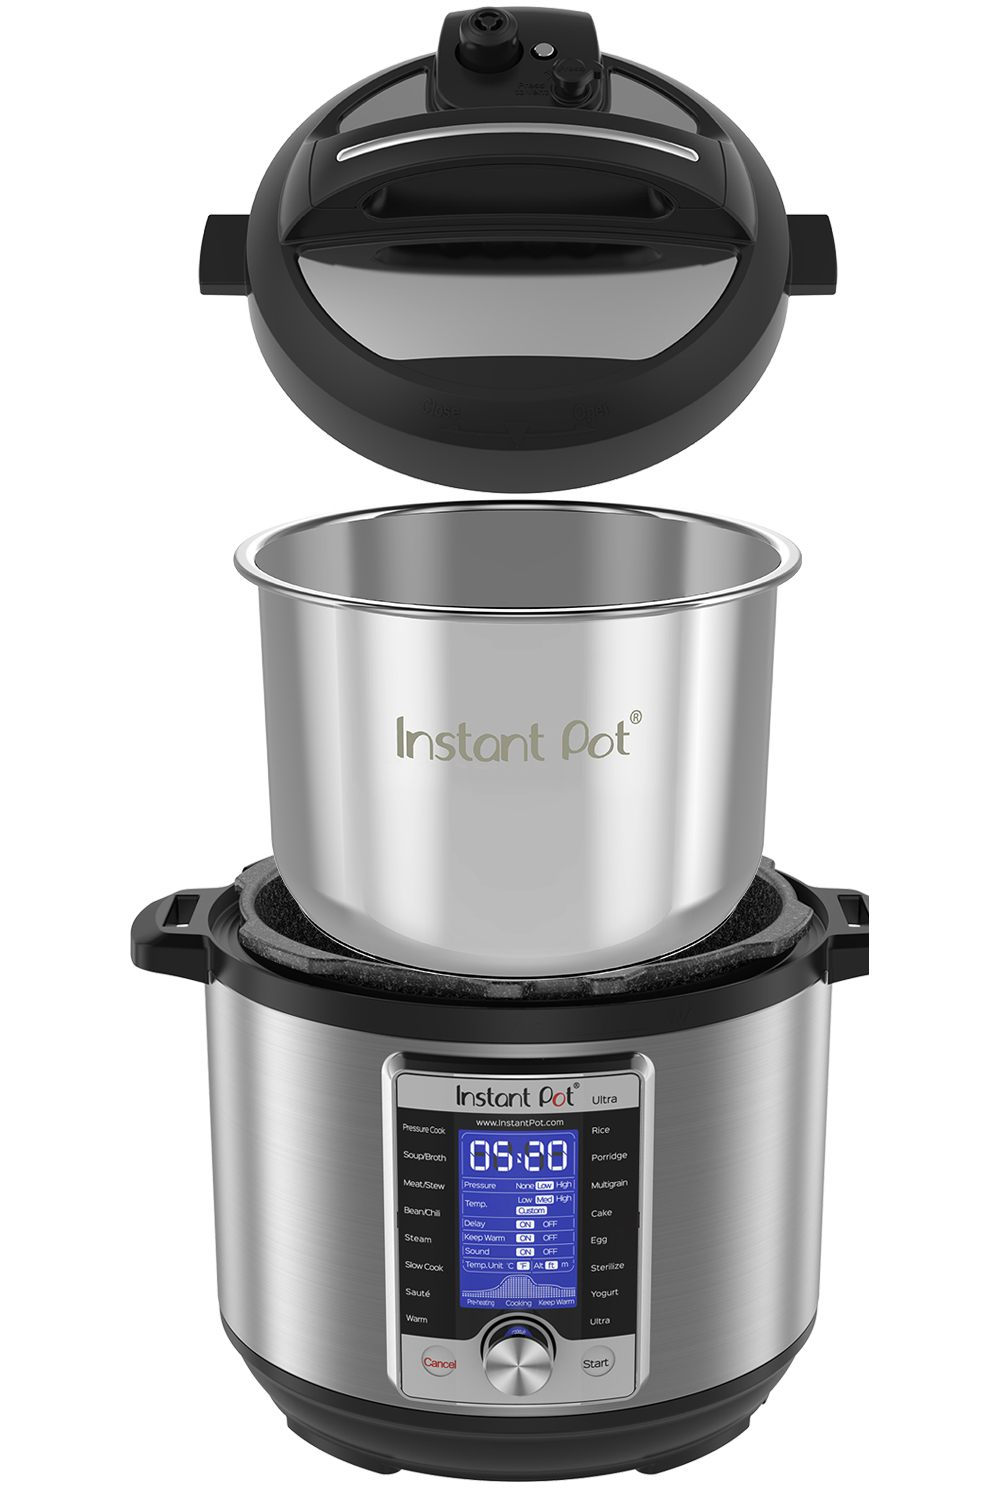 https://www.digitaltrends.com/wp-content/uploads/2019/06/instant-pot-ultra-6-qt-10-in-1-multi-use-programmable-pressure-cooker-4.jpg?p=1